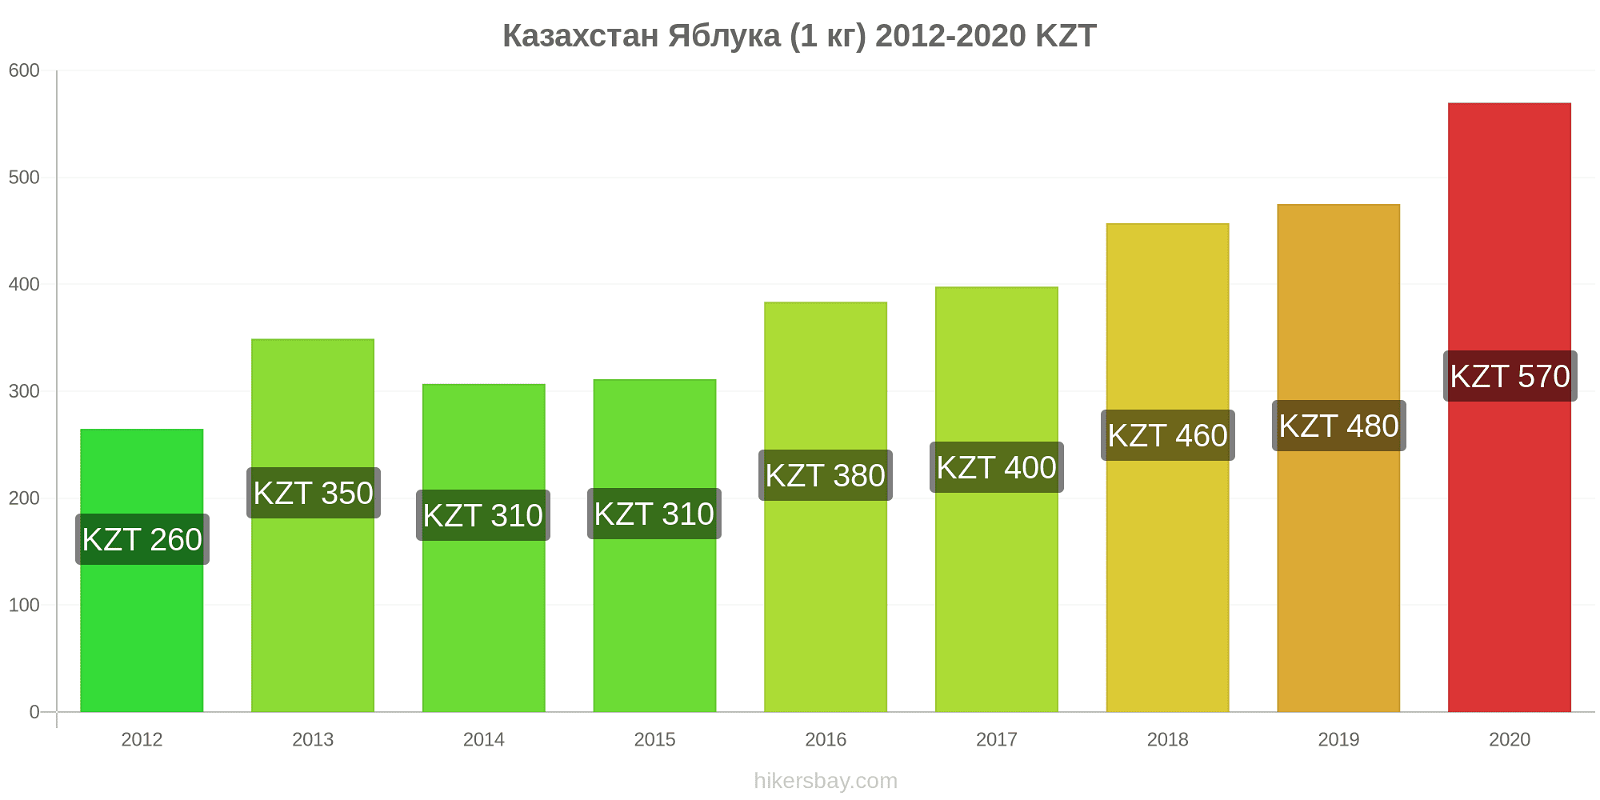 Казахстан зміни цін Яблука (1 кг) hikersbay.com